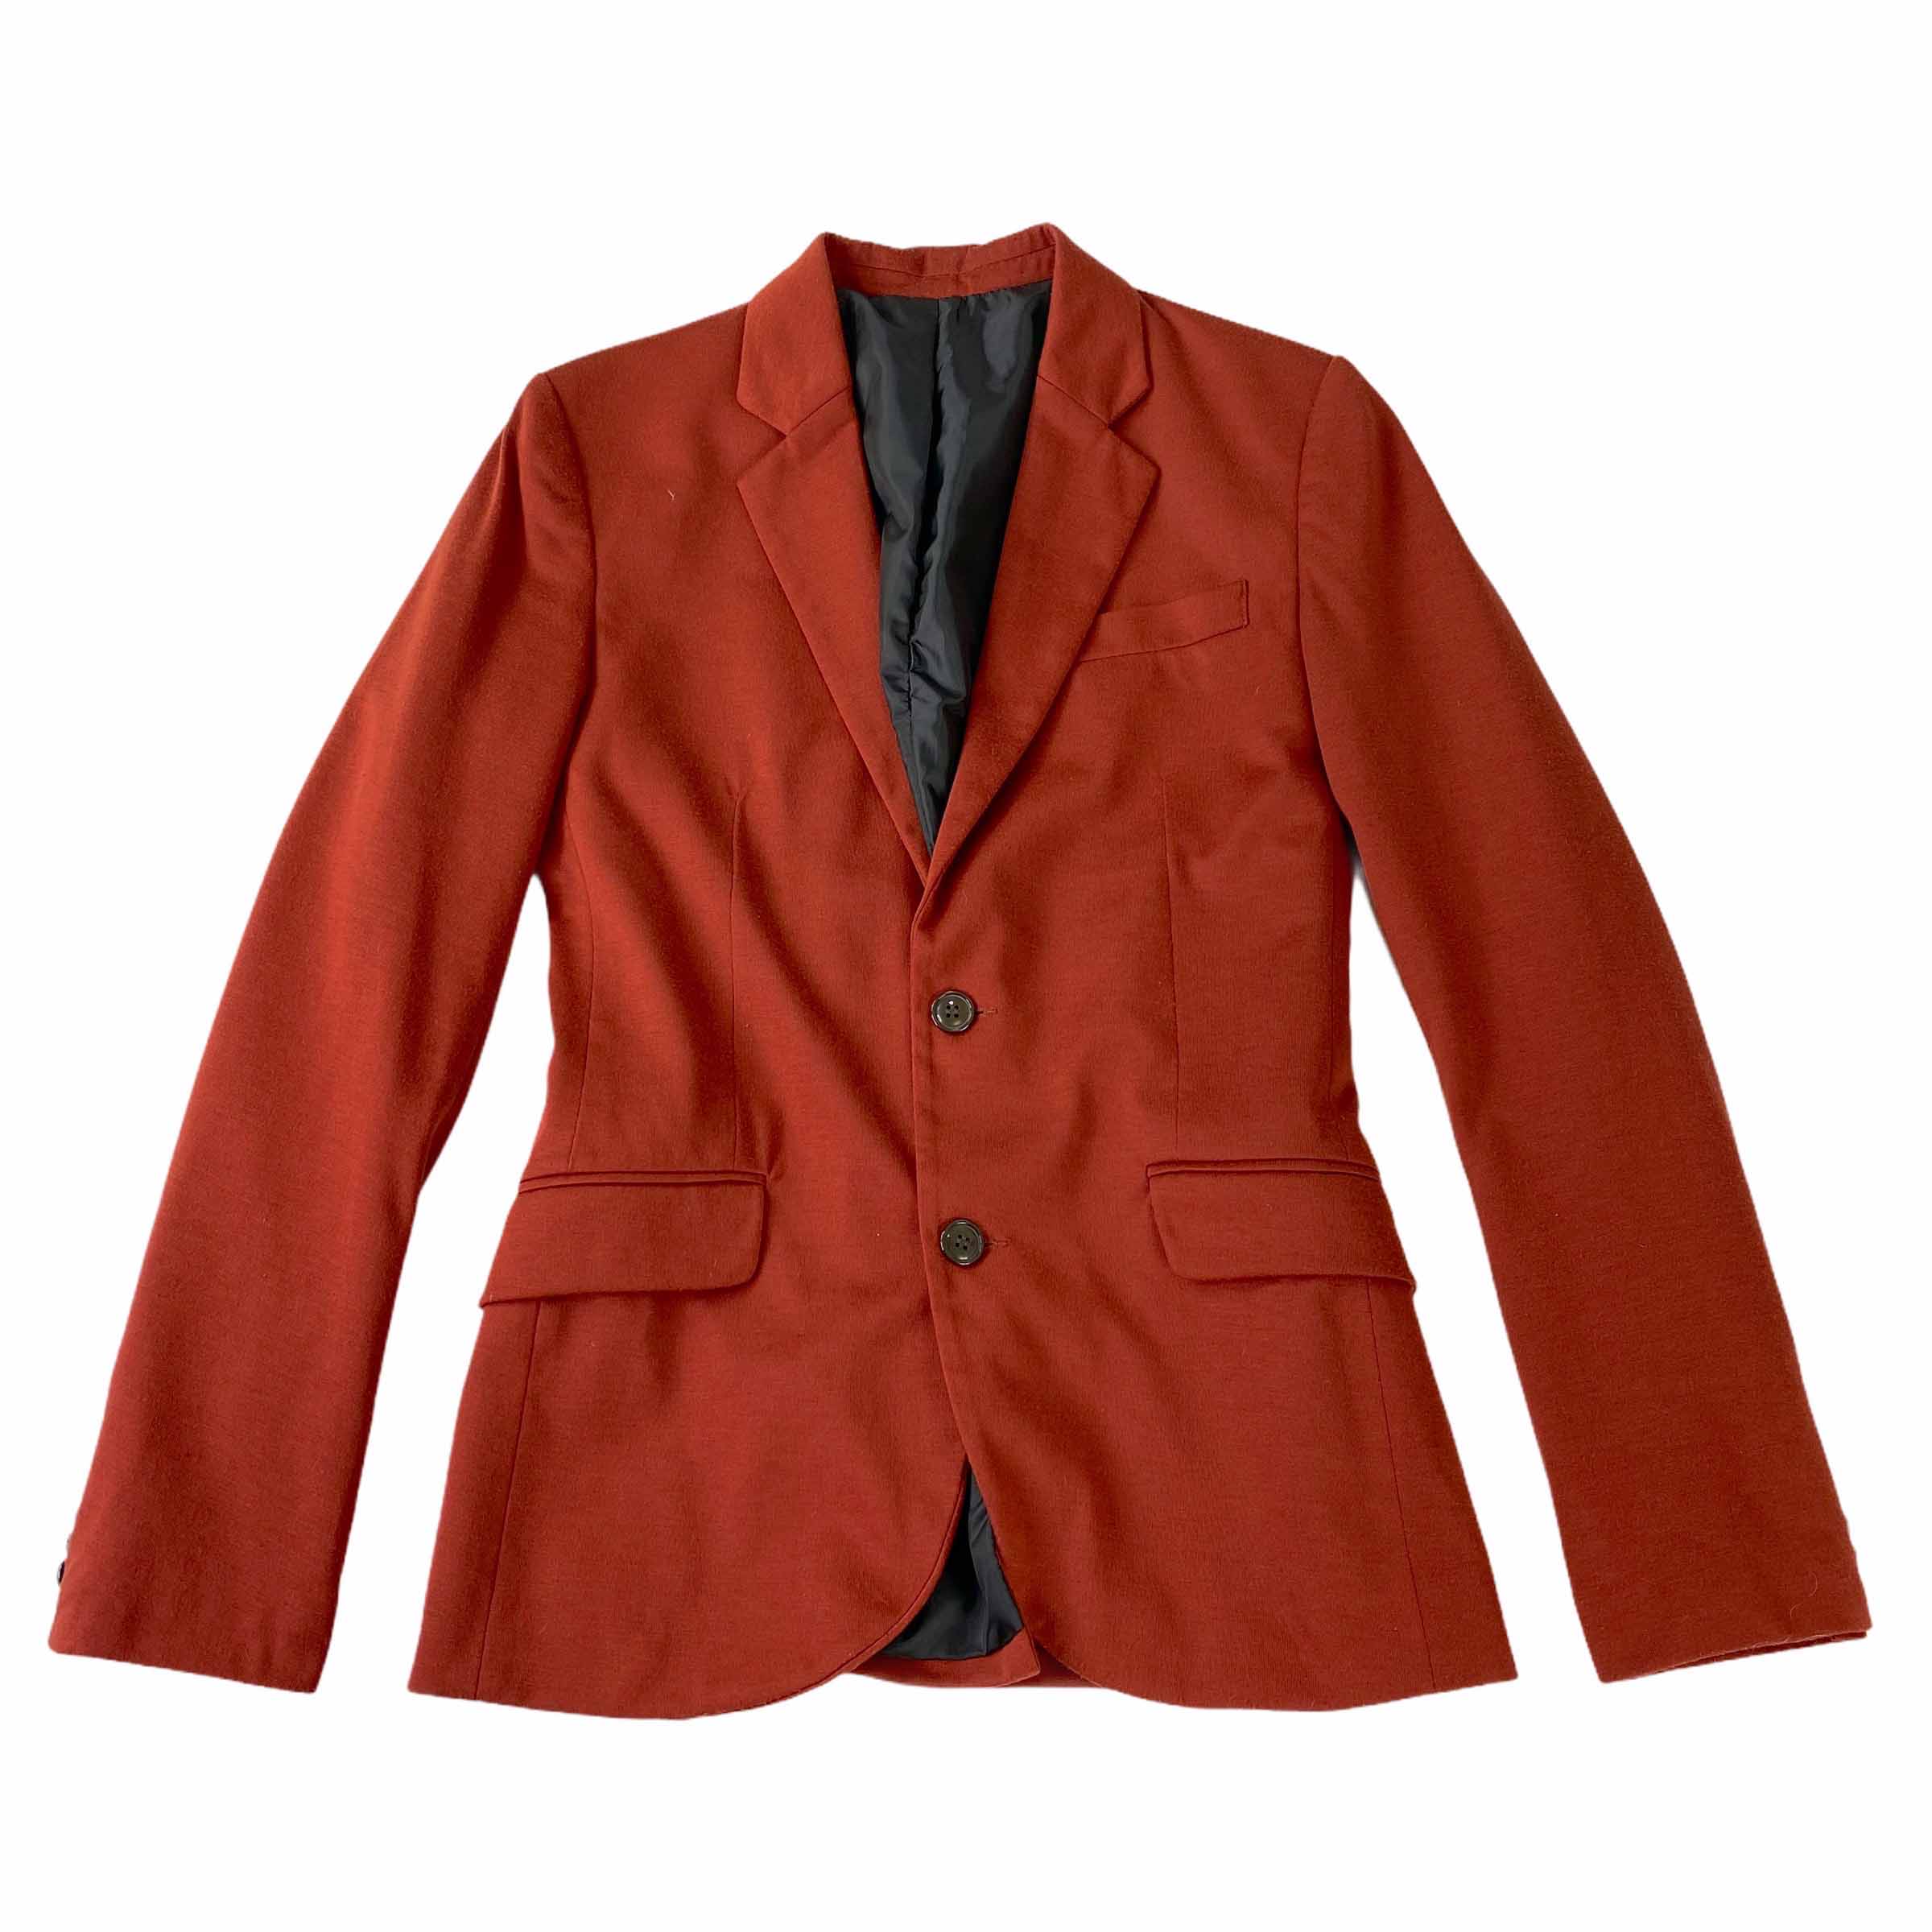 [Zara] Basic Orange Brown Jacket - Size S